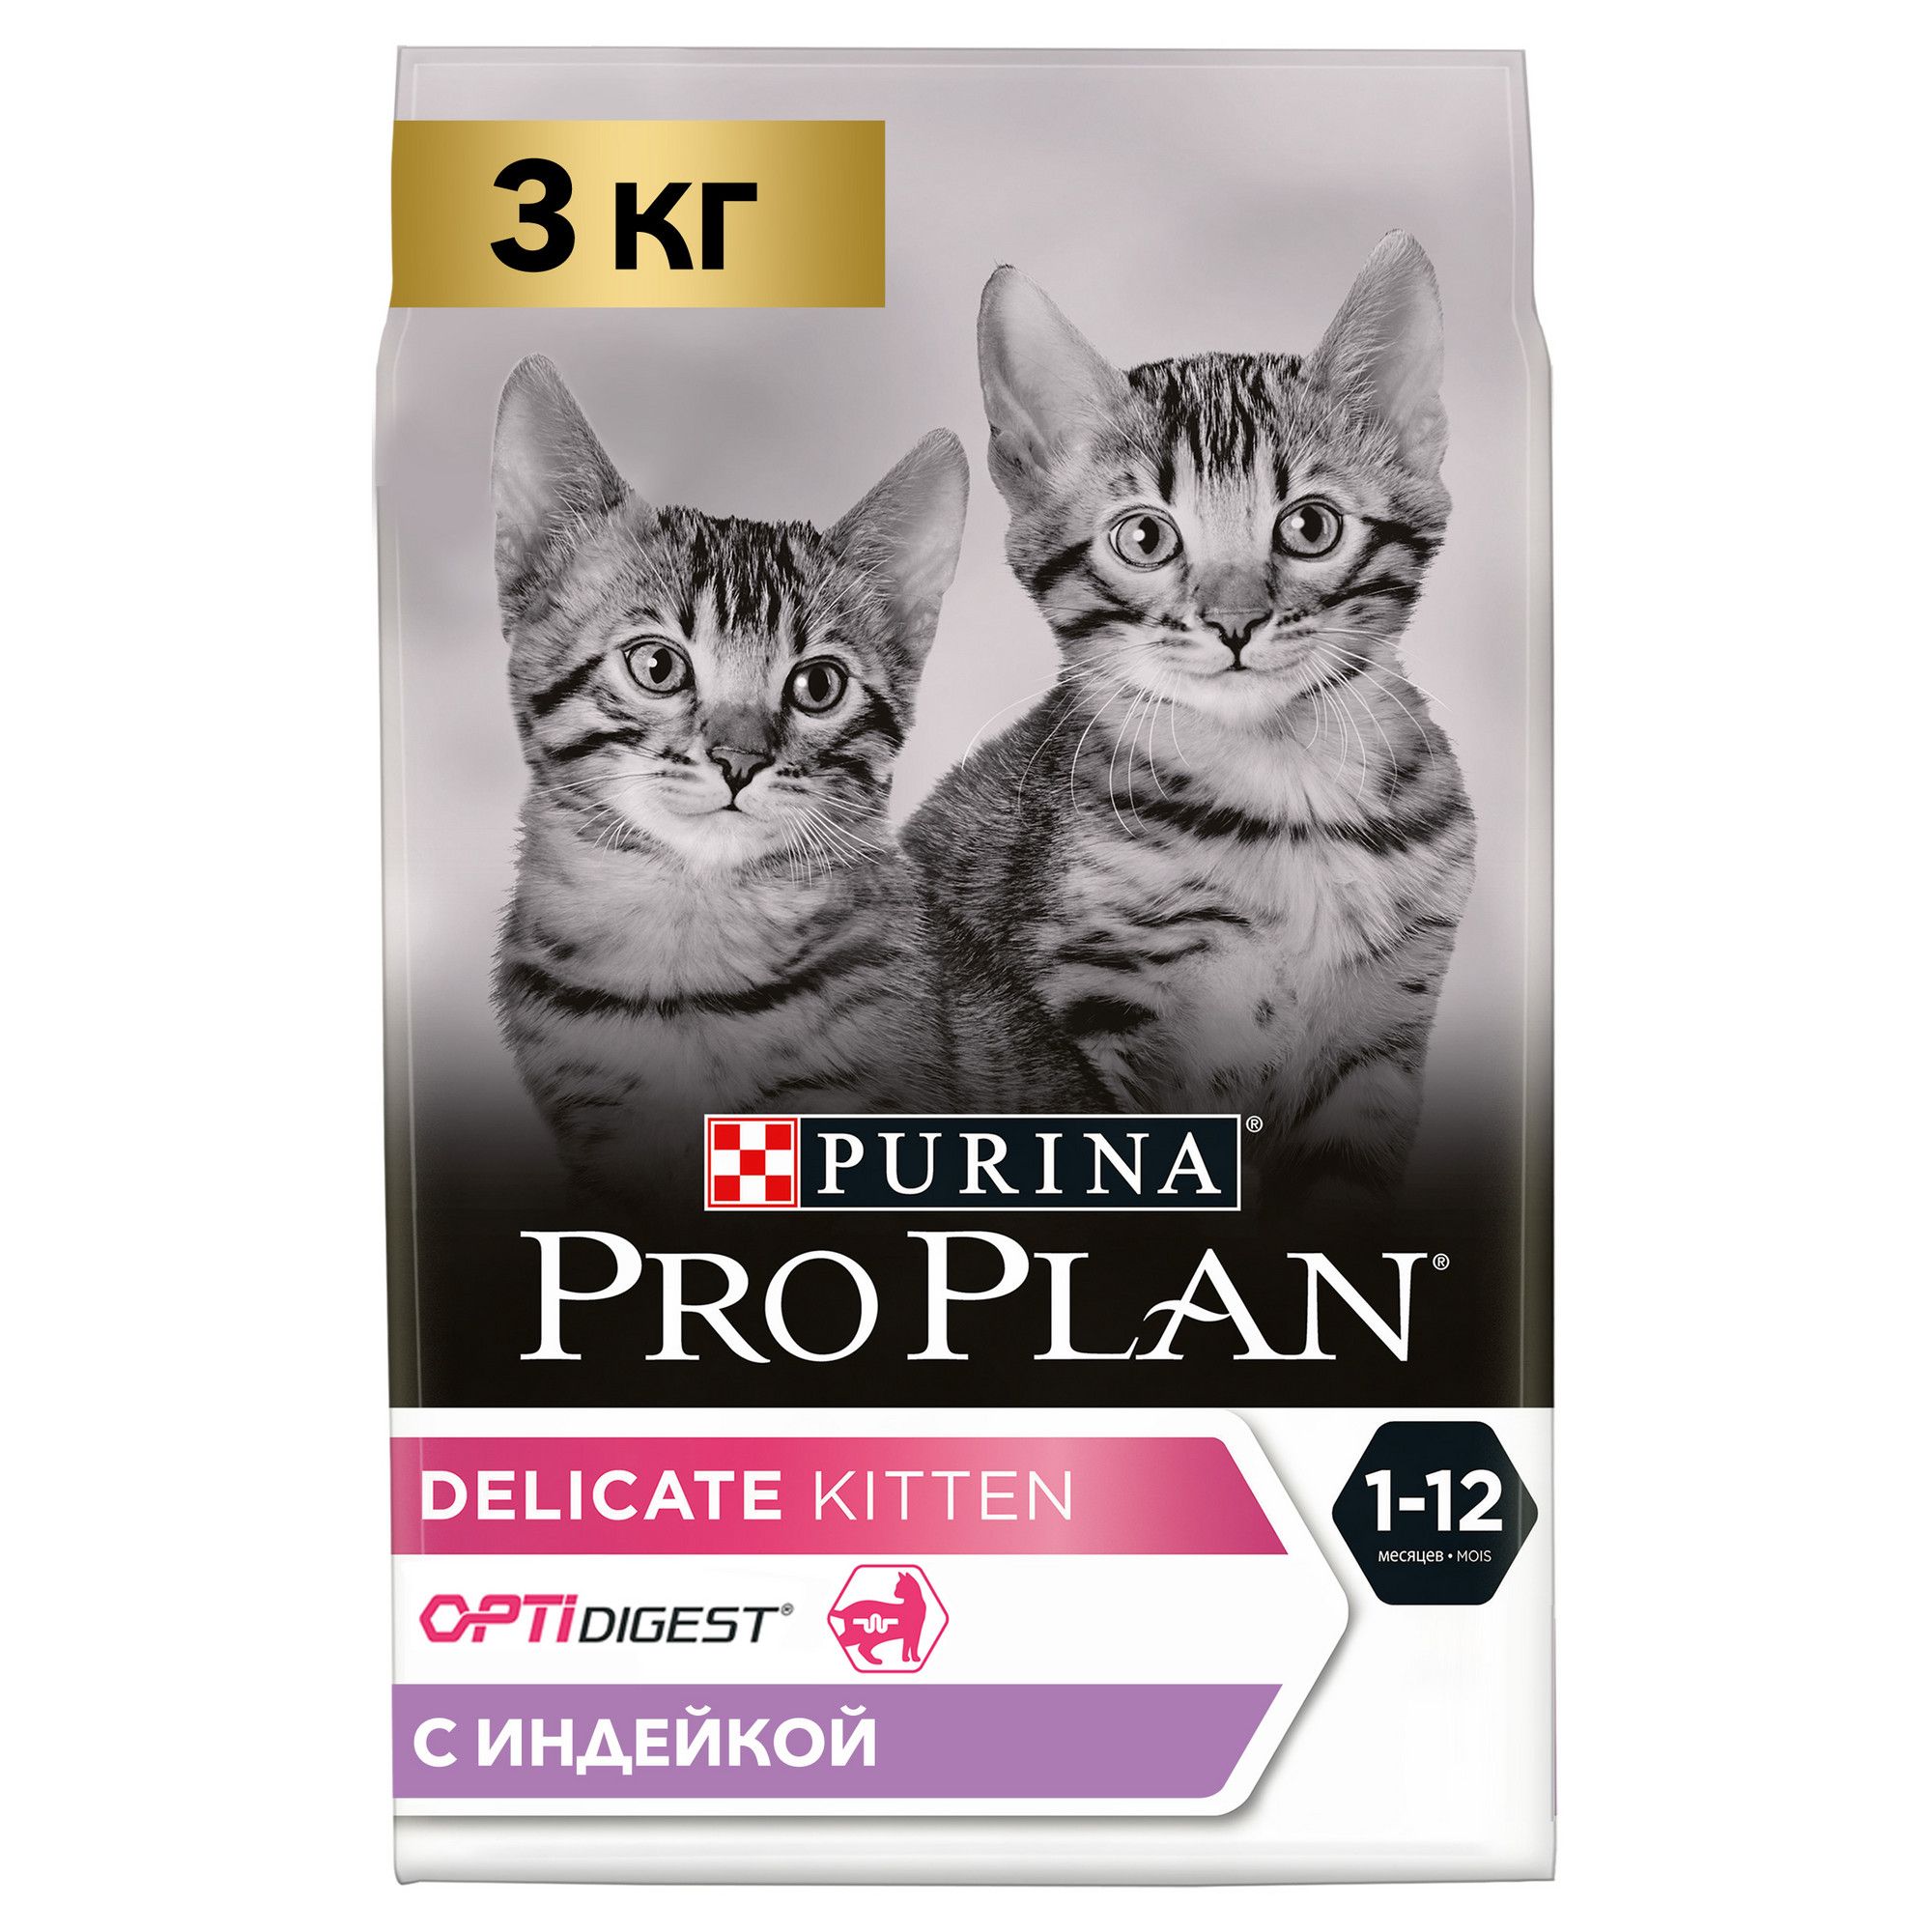 Purina Pro Plan Original Kitten. Корм для котят Purina Pro Plan delicate с индейкой 400 г. Проплан Деликат для котят с индейкой. Pro Plan Kitten delicate OPTIDIGEST Turkey 10 кг.